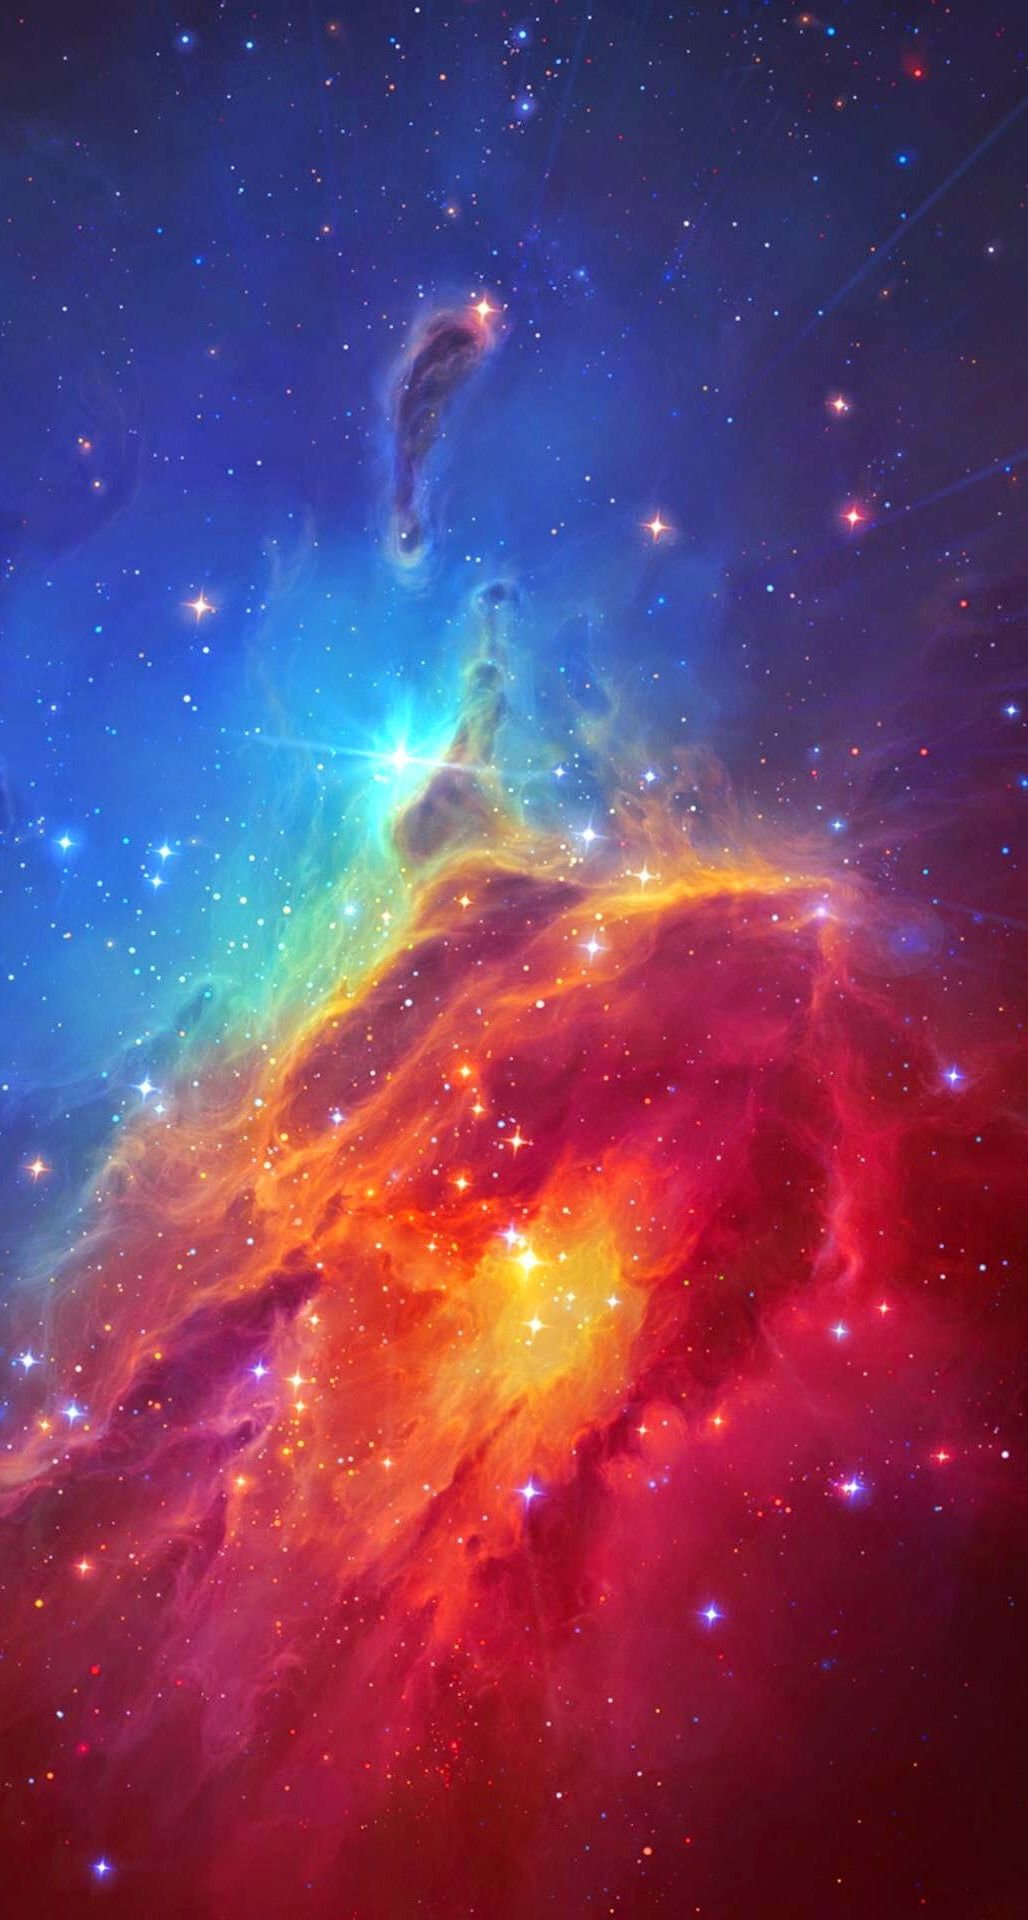 Stunning Colorful Space Nebula iPhone 6 Plus HD Wallpaper HD Free Download iPhoneWalls Phone Wallpaper